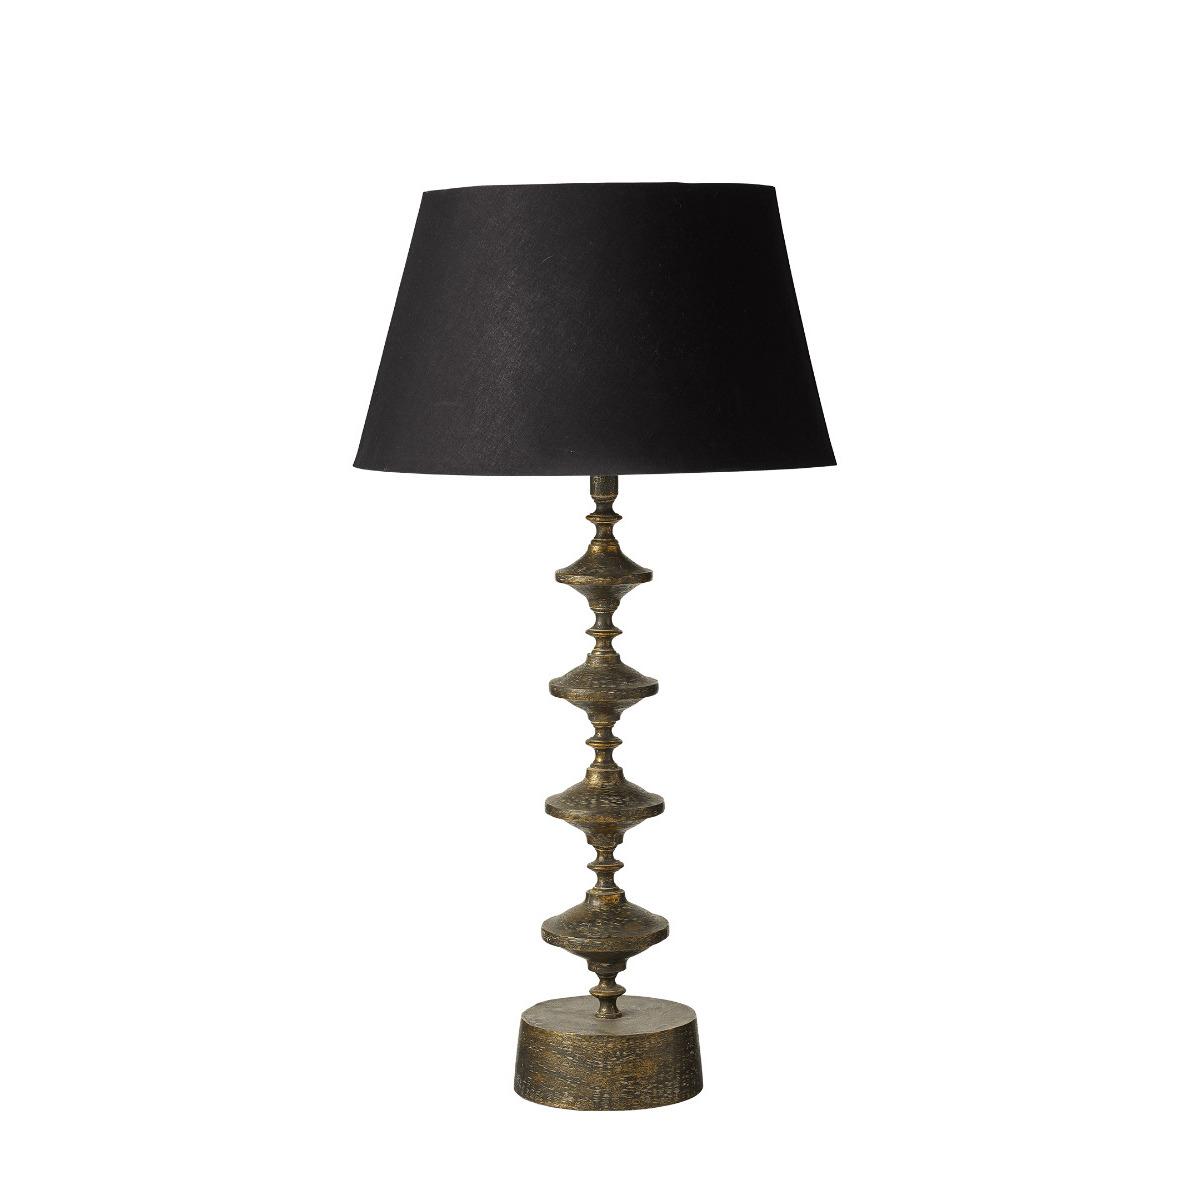 OKA, Tarkarli Table Lamp - Antique Gold, Table Lamps, Aluminium